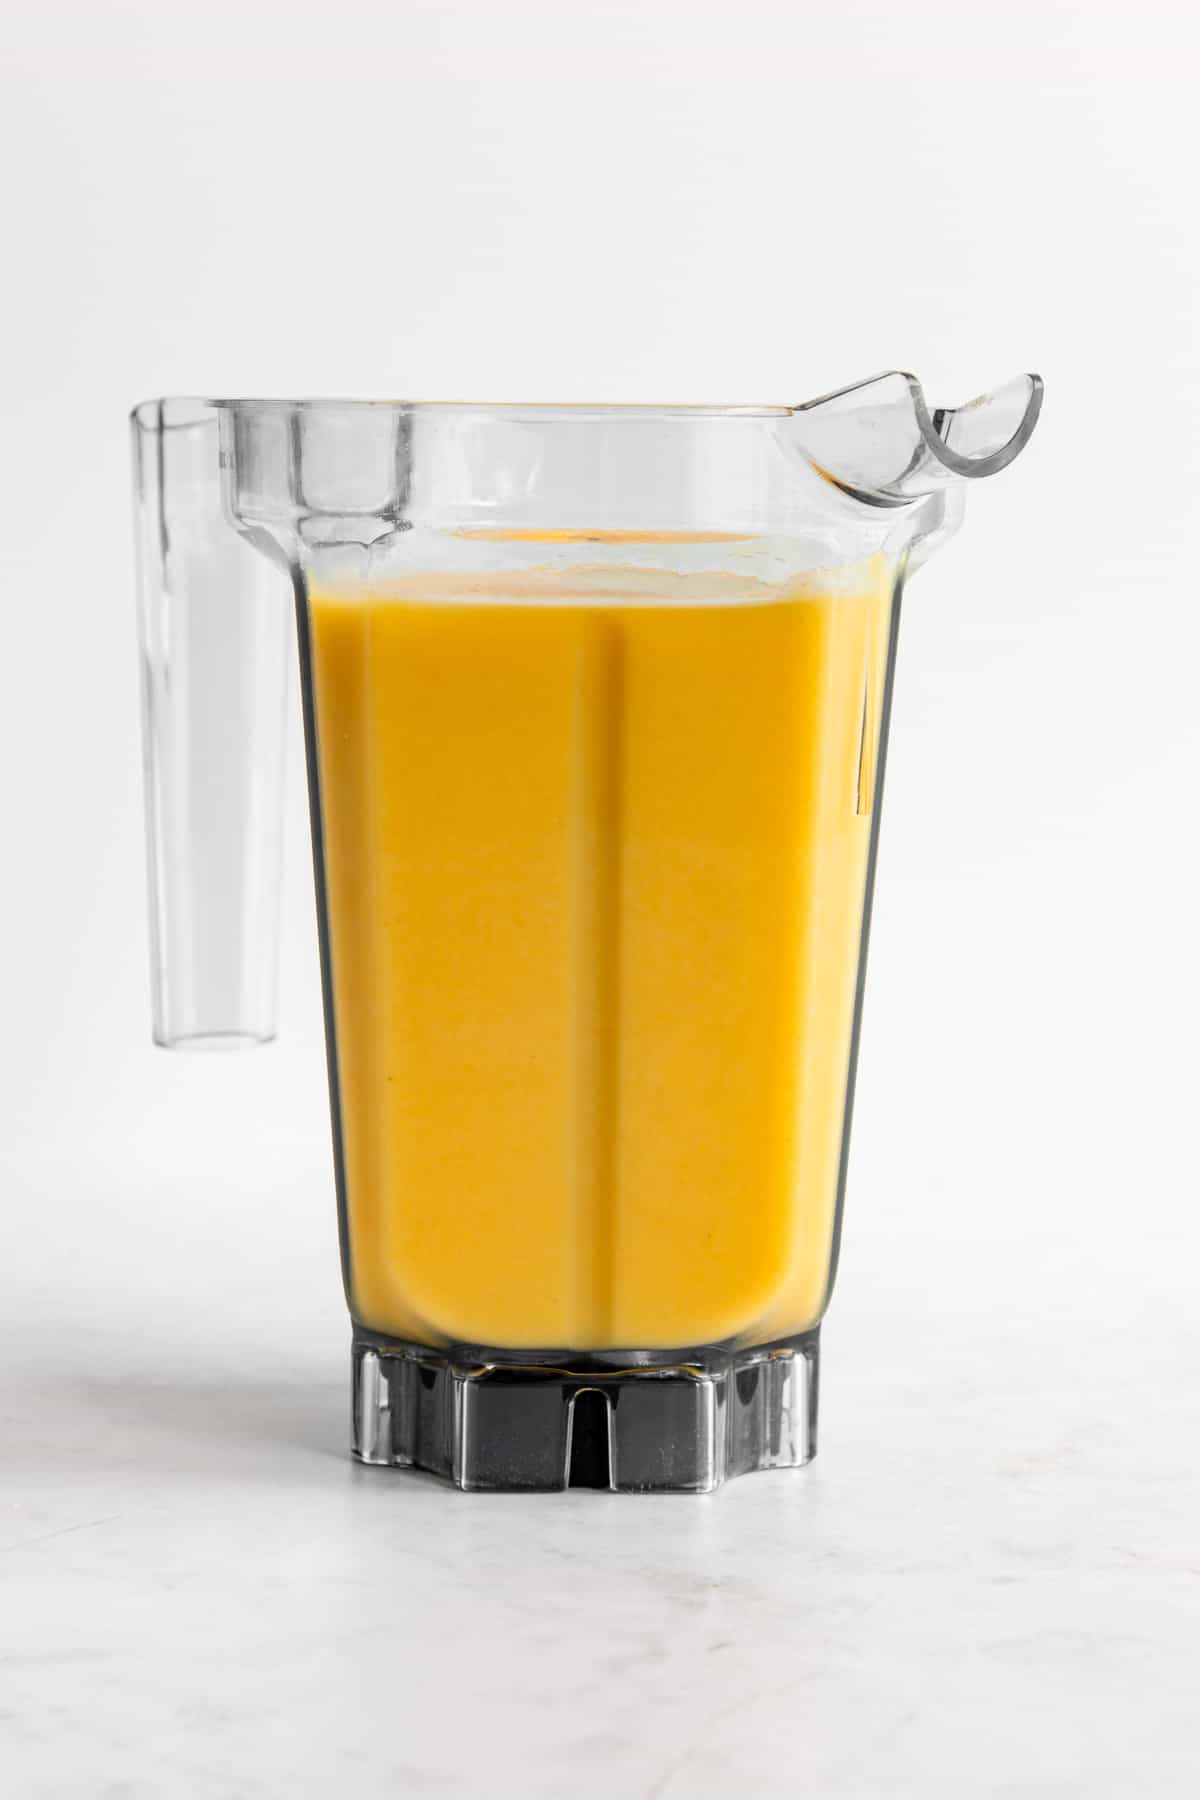 banana mango smoothie blended inside a vitamix blender